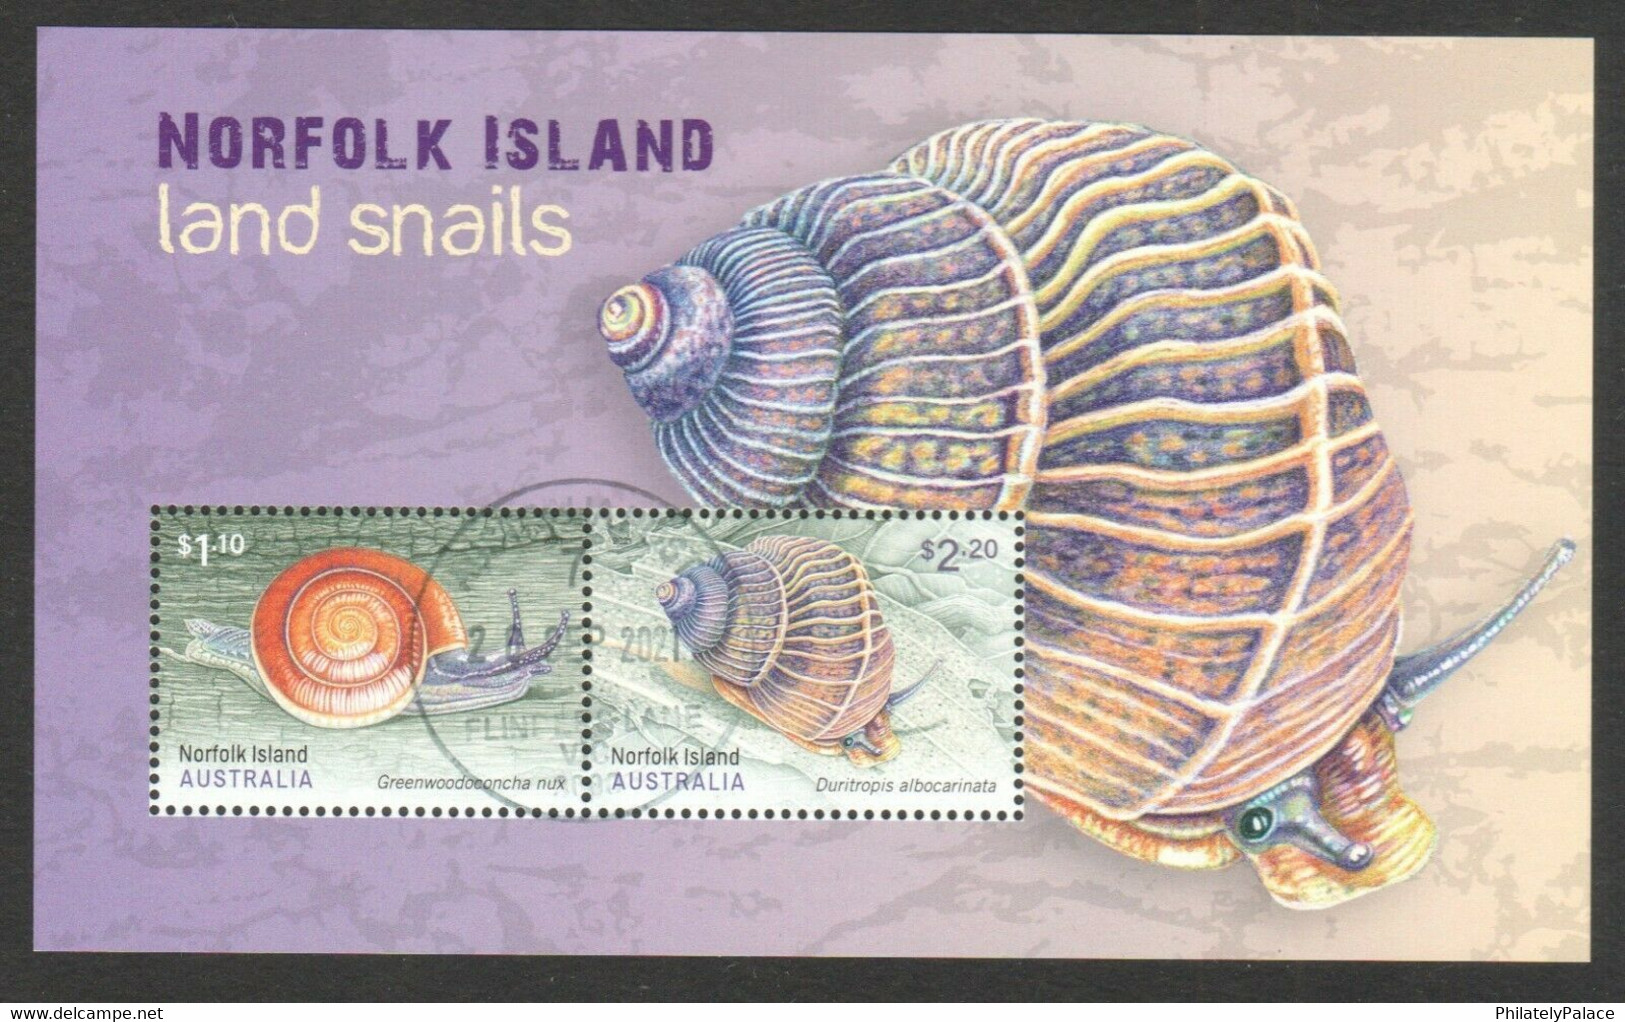 AUSTRALIA NORFOLK ISLAND 2021 LAND SNAILS SOUVENIR SHEET OF 2 STAMPS FINE USED  (**) - Used Stamps